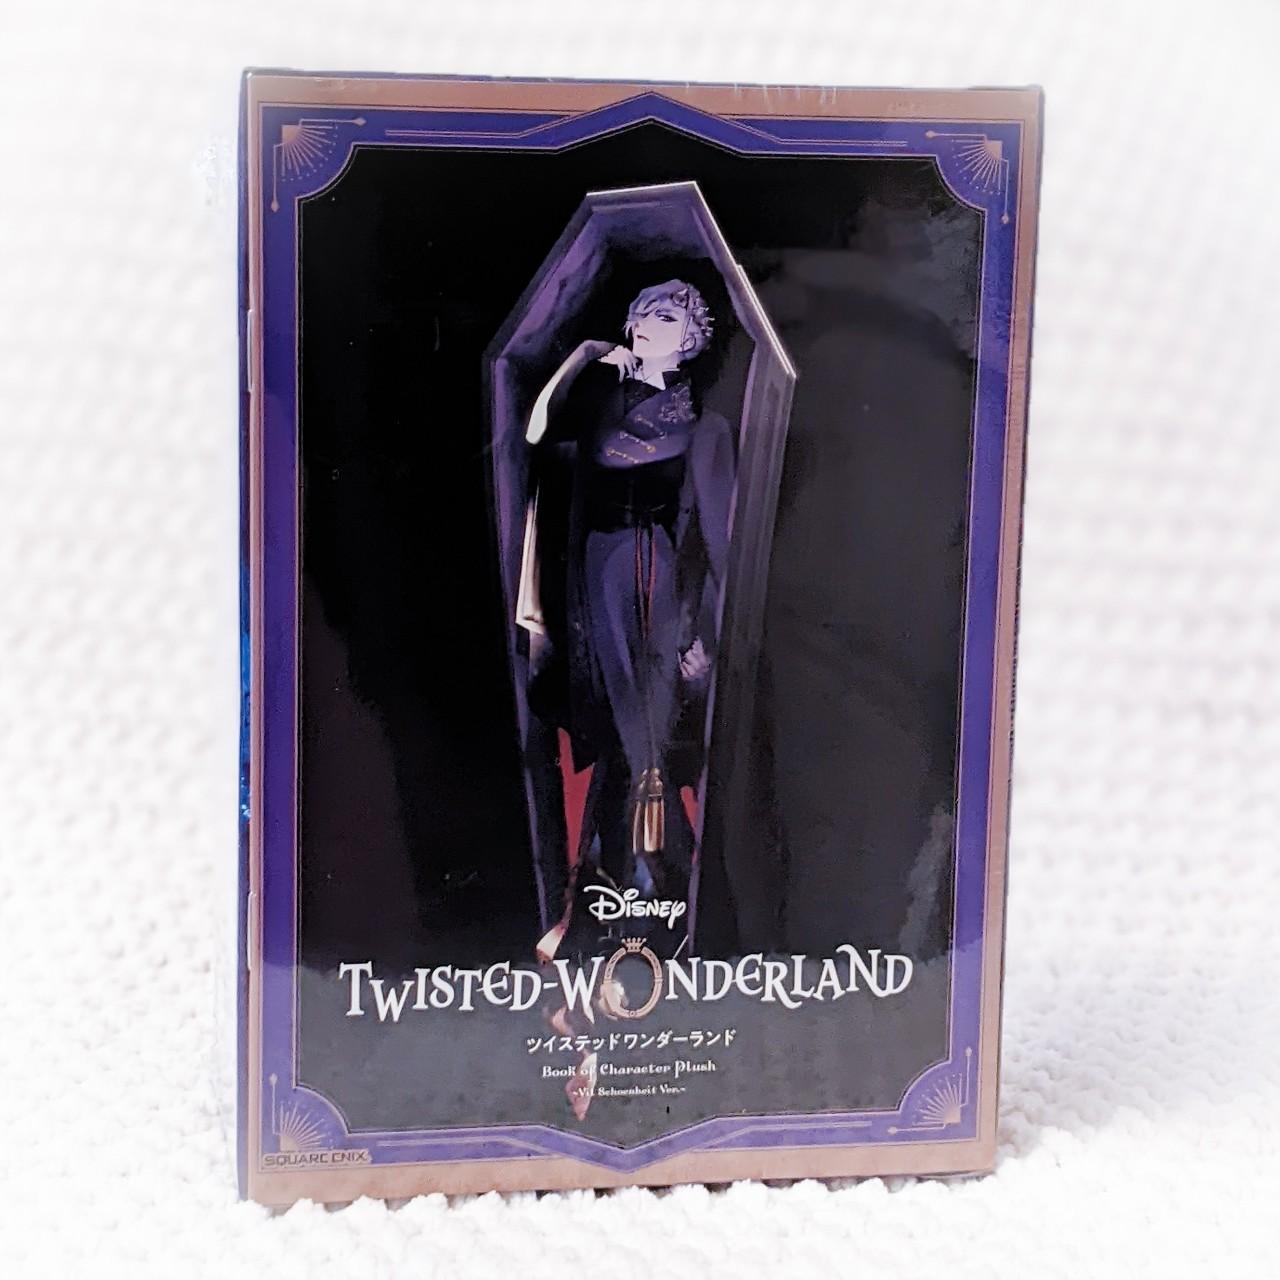 Vil Schoenheit Disney Twisted Wonderland Anime Plush Doll & Book